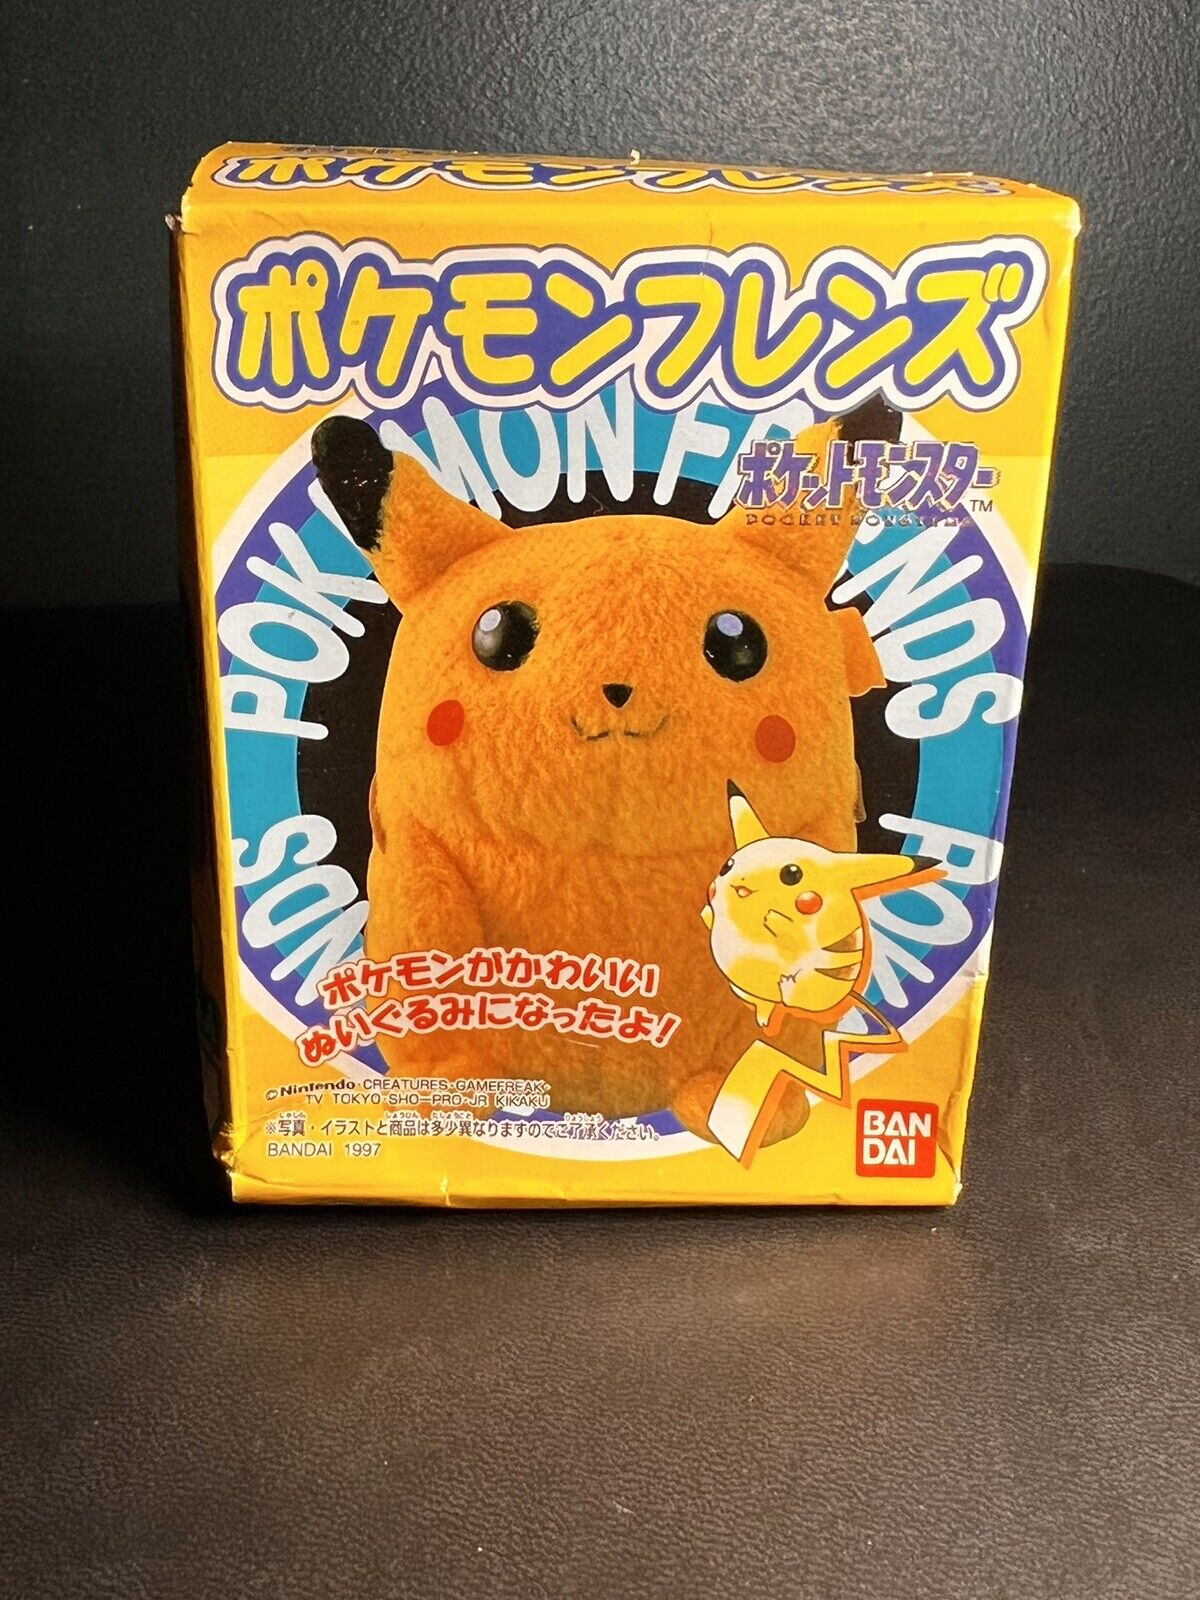 Bandai Pokemon Friends Pikachu 1997 Japanese Sealed Mini Plush Toy Series 1